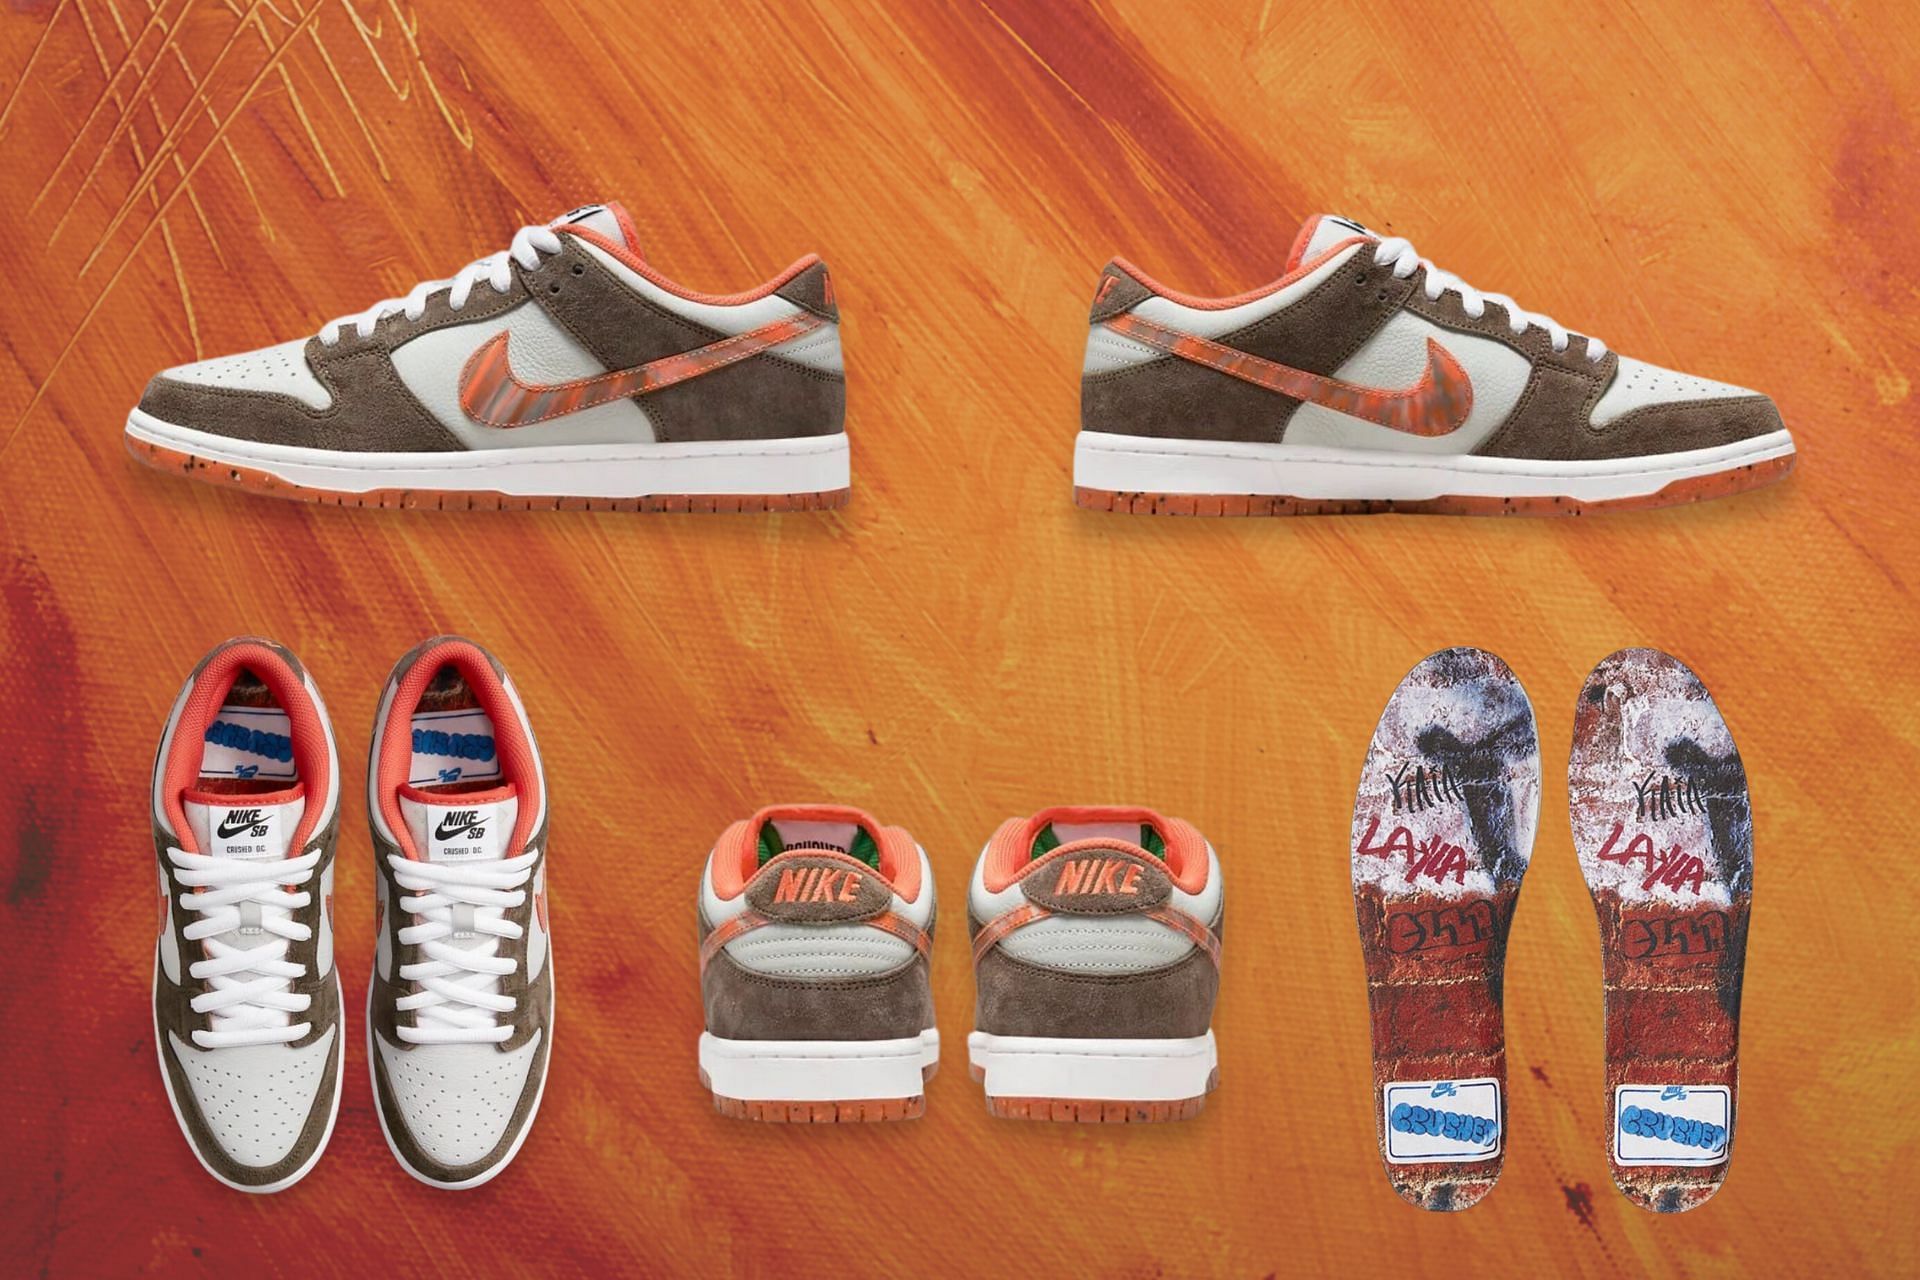 Where skate shops sb dunks to buy Crushed Skate Shop x Nike SB Dunk Low shoes? Price